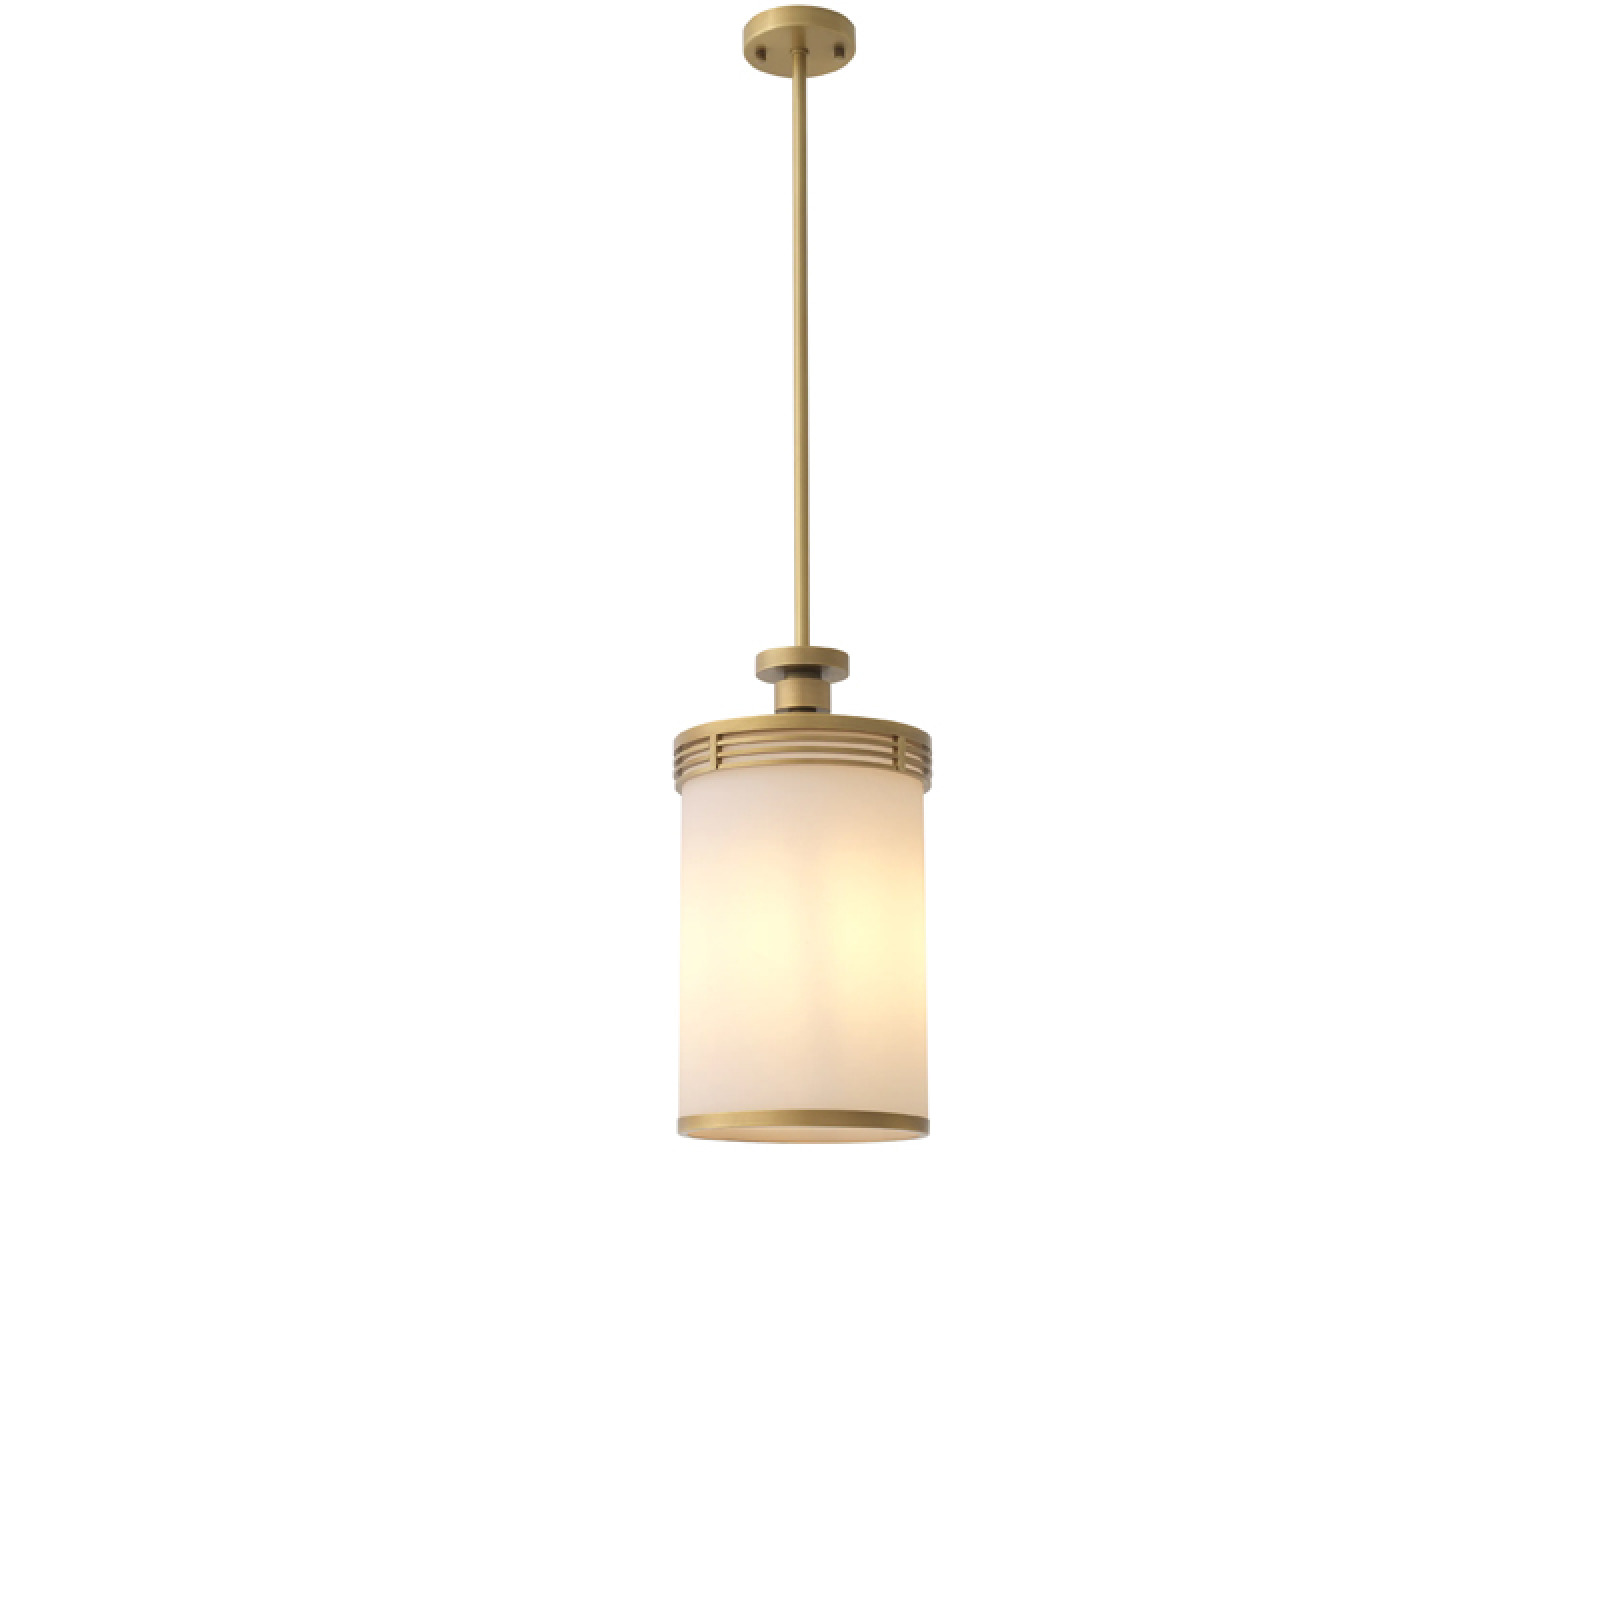 Fayence ceiling lamp